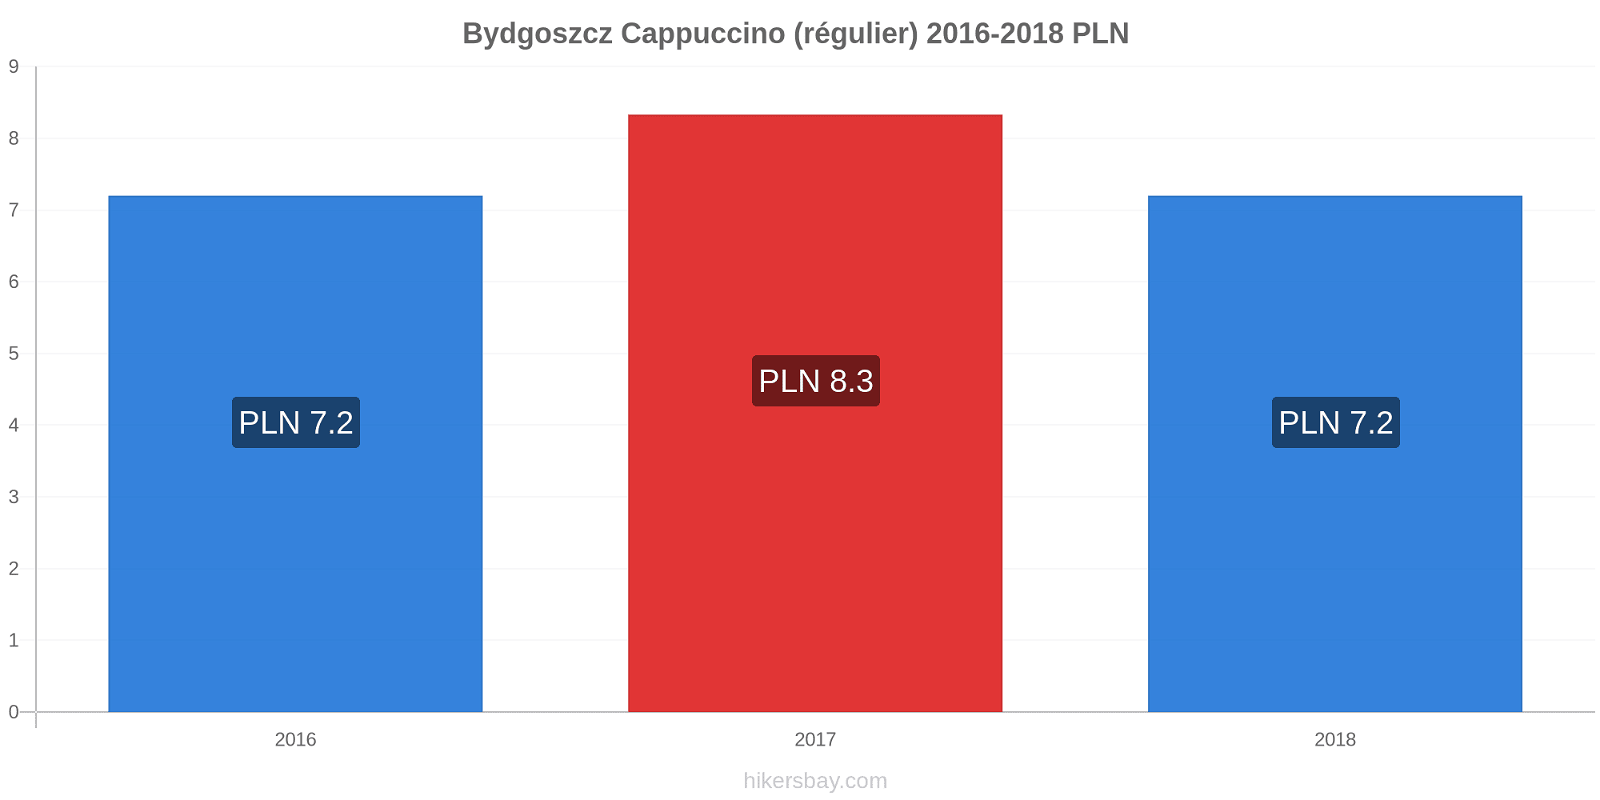 Bydgoszcz changements de prix Cappuccino (régulier) hikersbay.com